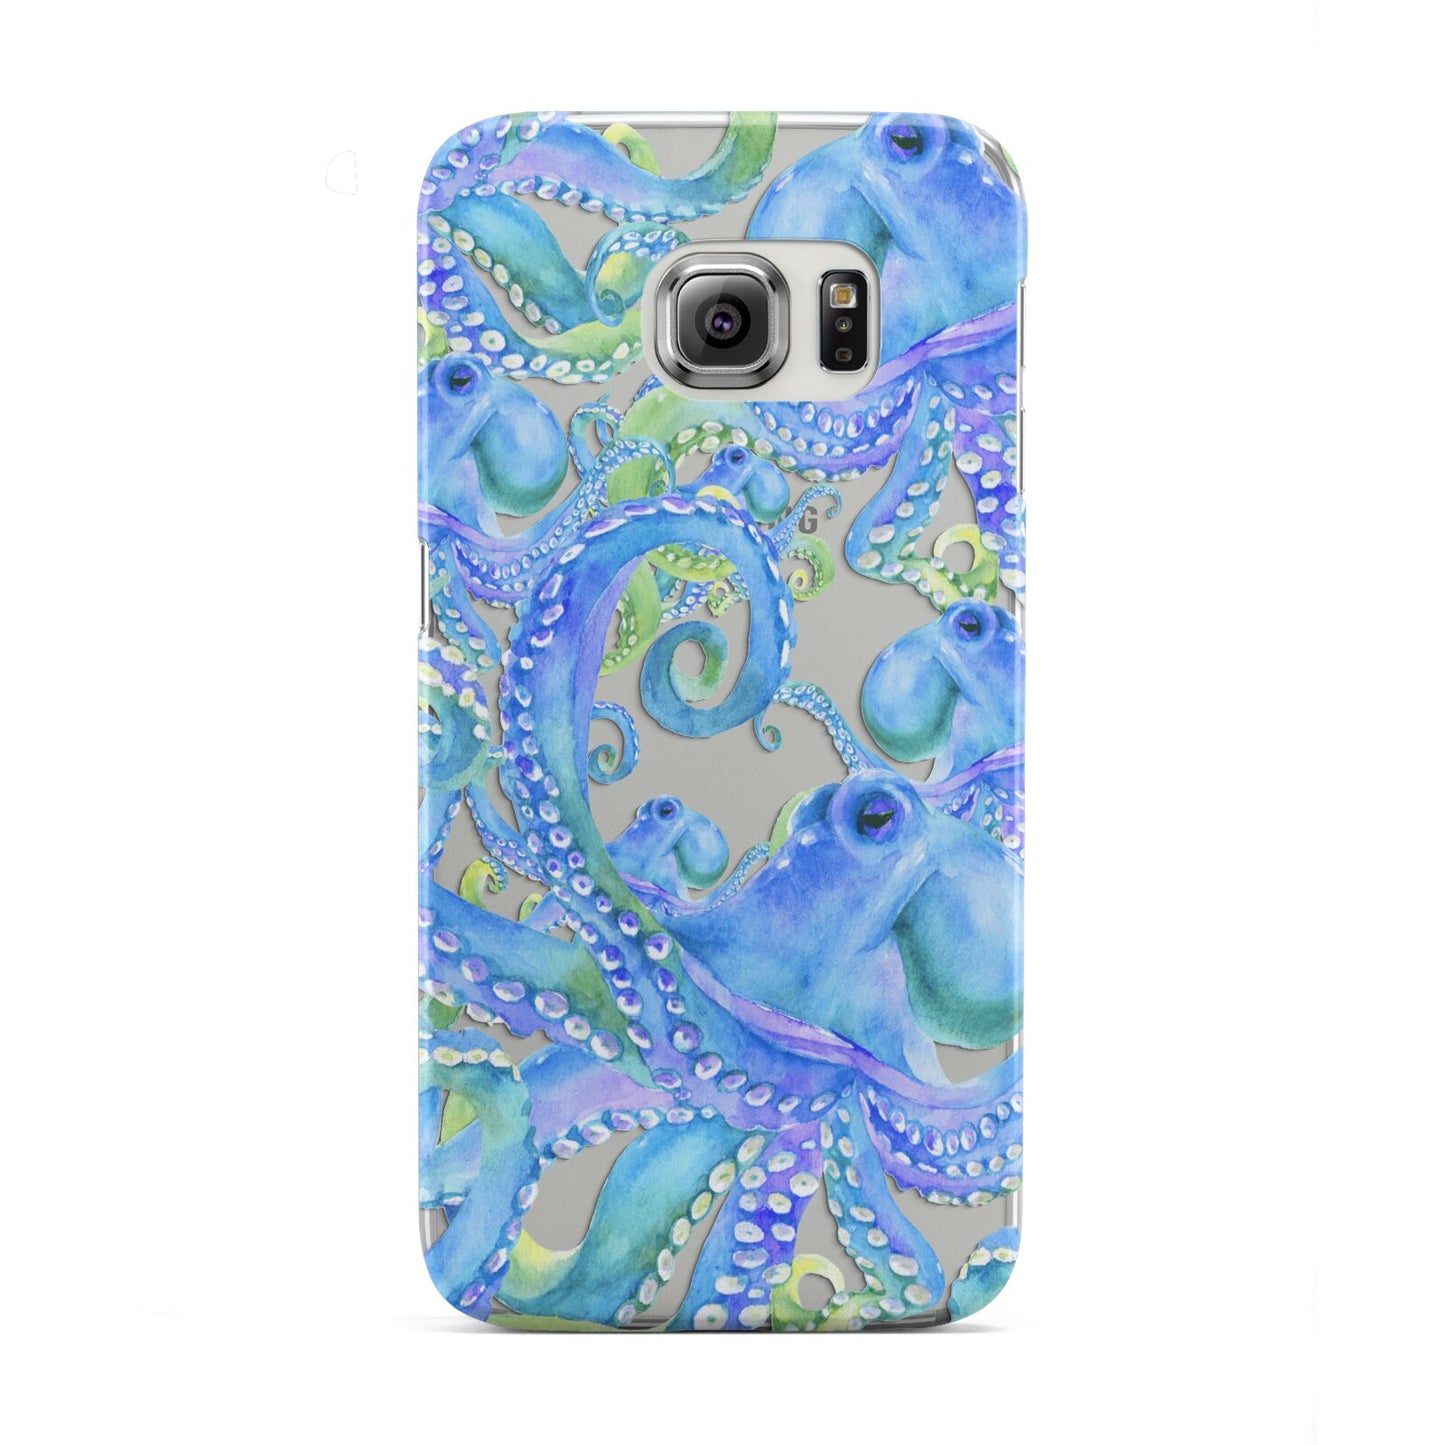 Octopus Samsung Galaxy S6 Edge Case